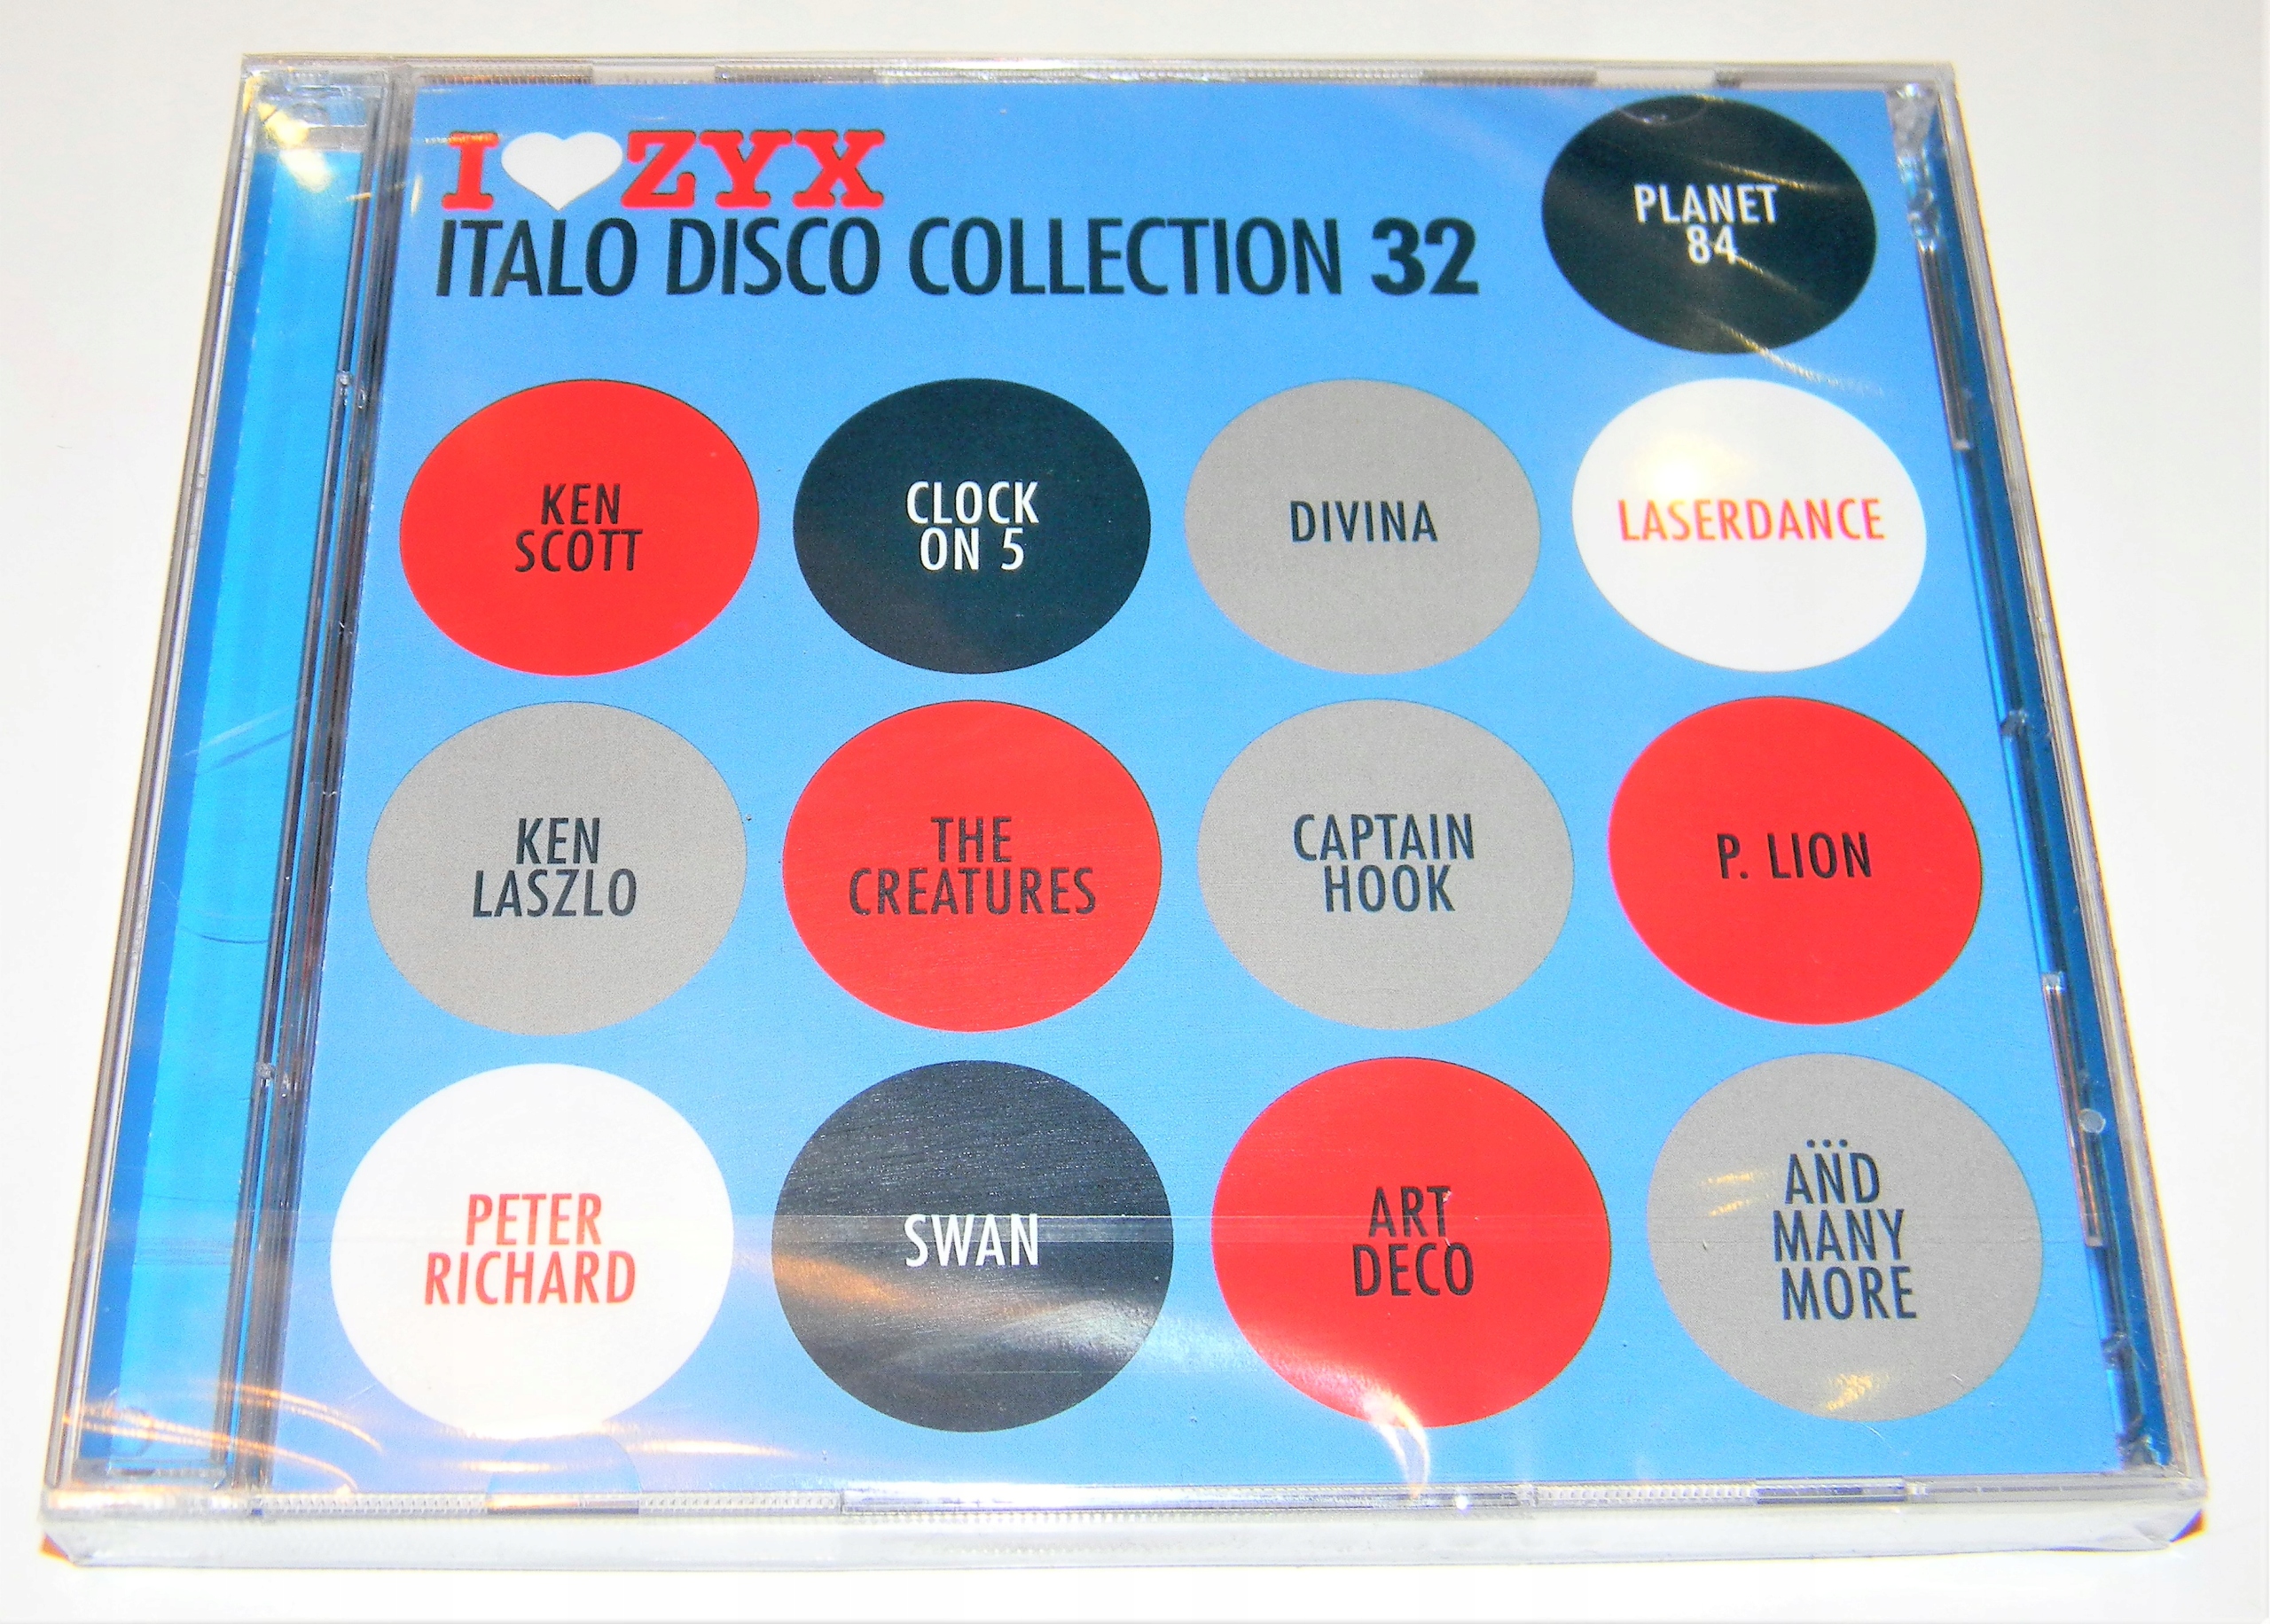 Ciclon коллекция discola. Italo disco collection